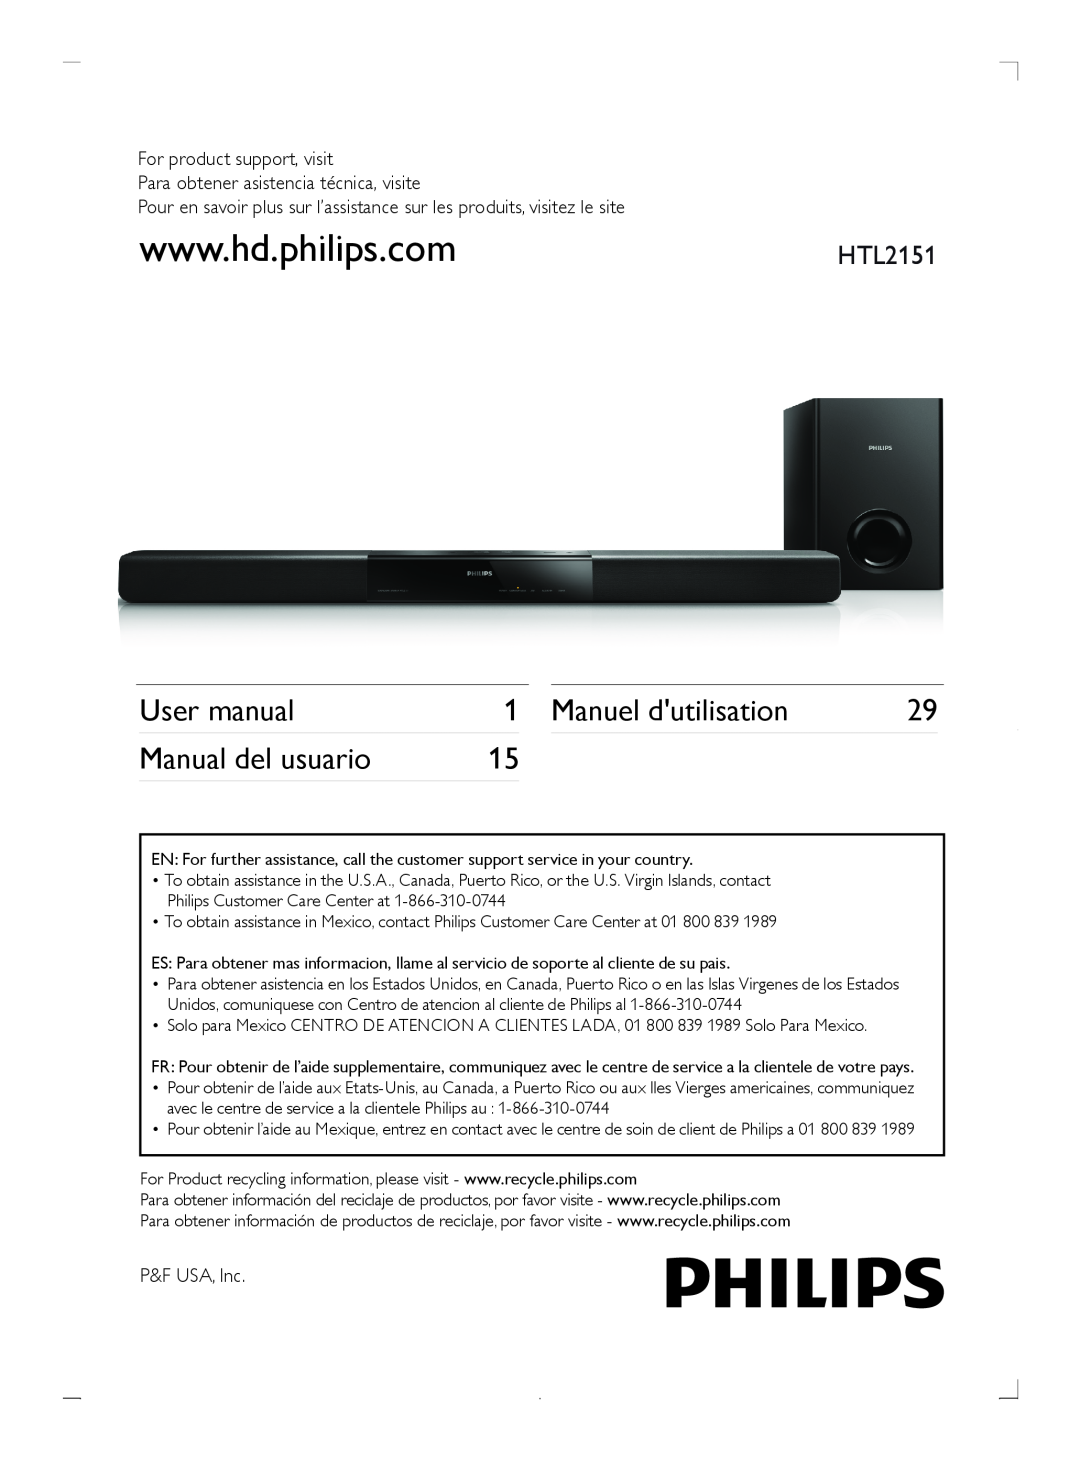 Philips HTL2151F7 manuel dutilisation Manuel dutilisation, Manual del usuario 